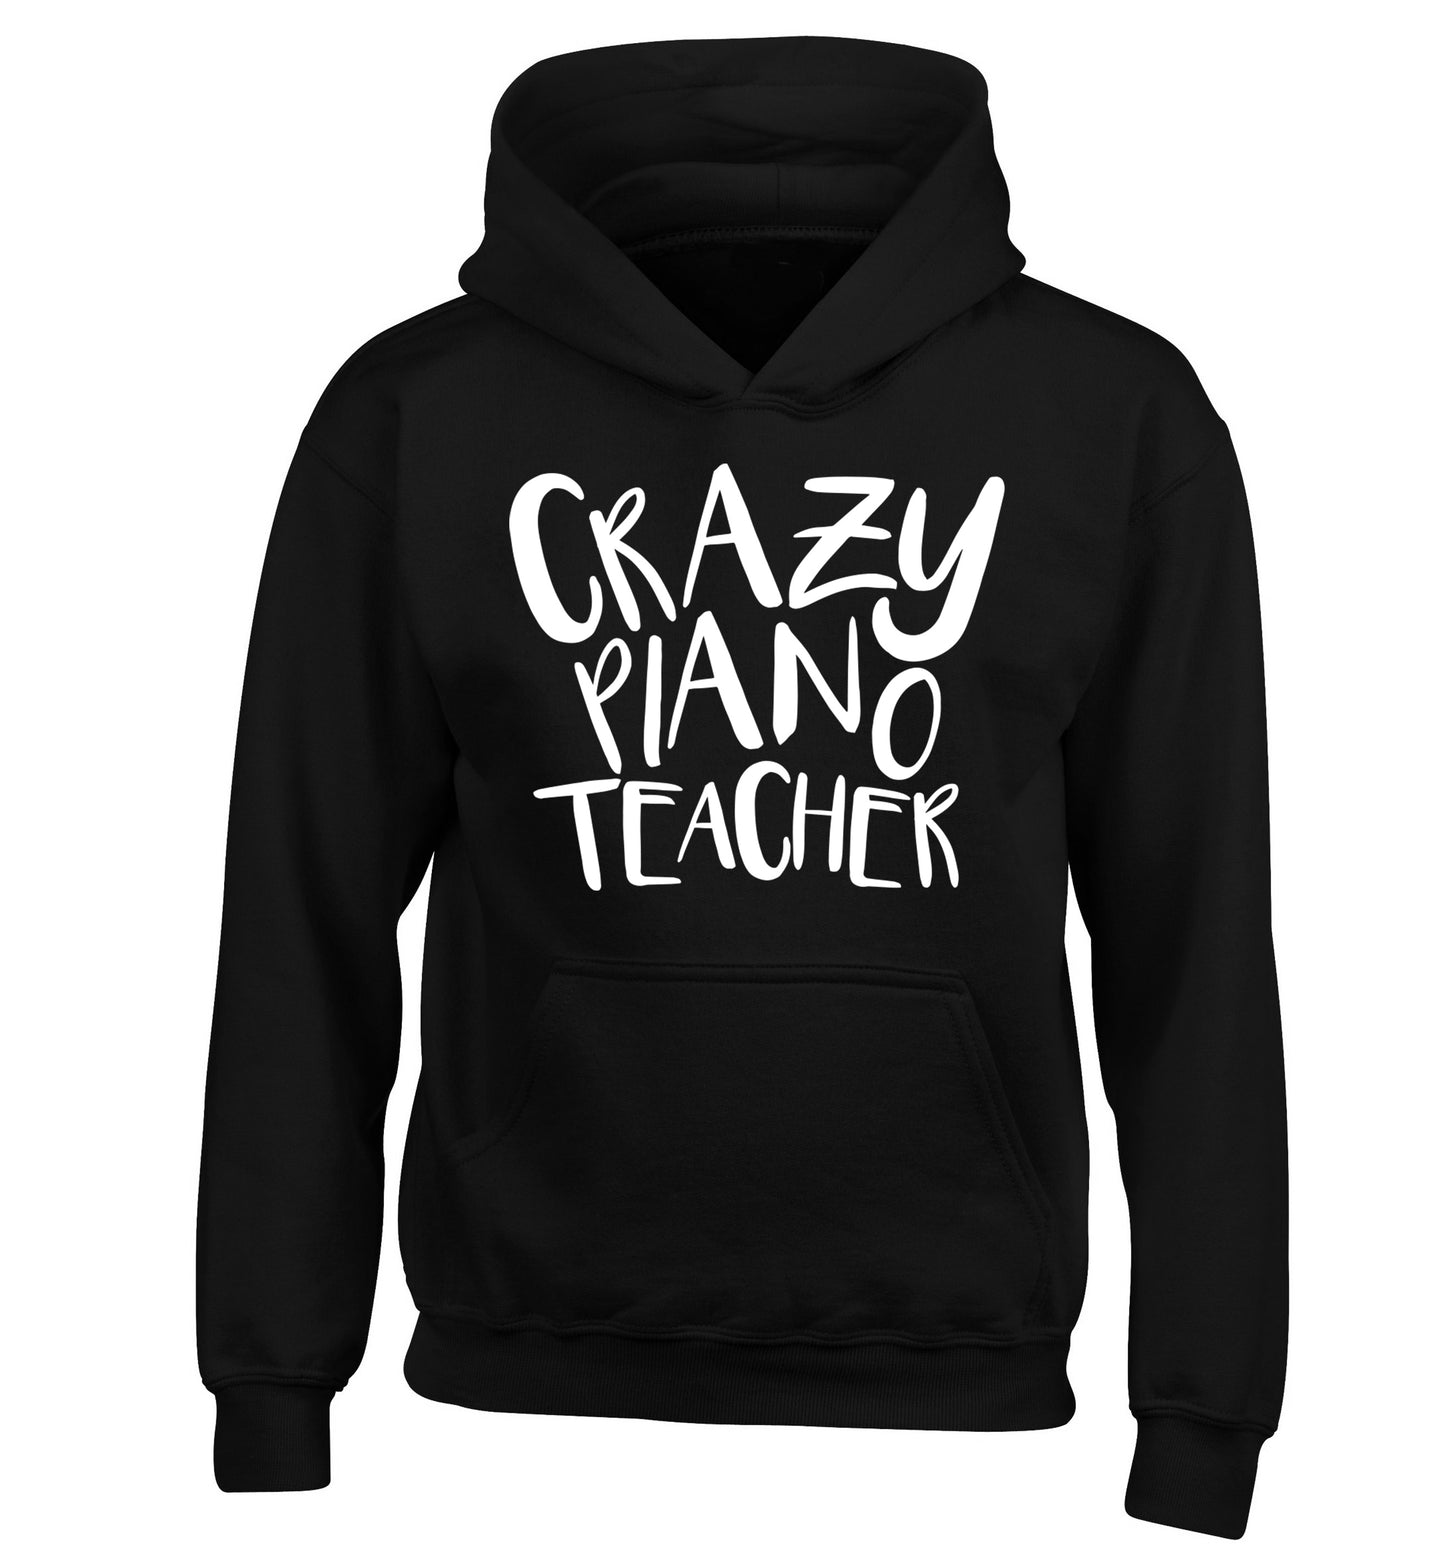 Crazy piano teacher children's black hoodie 12-13 Years